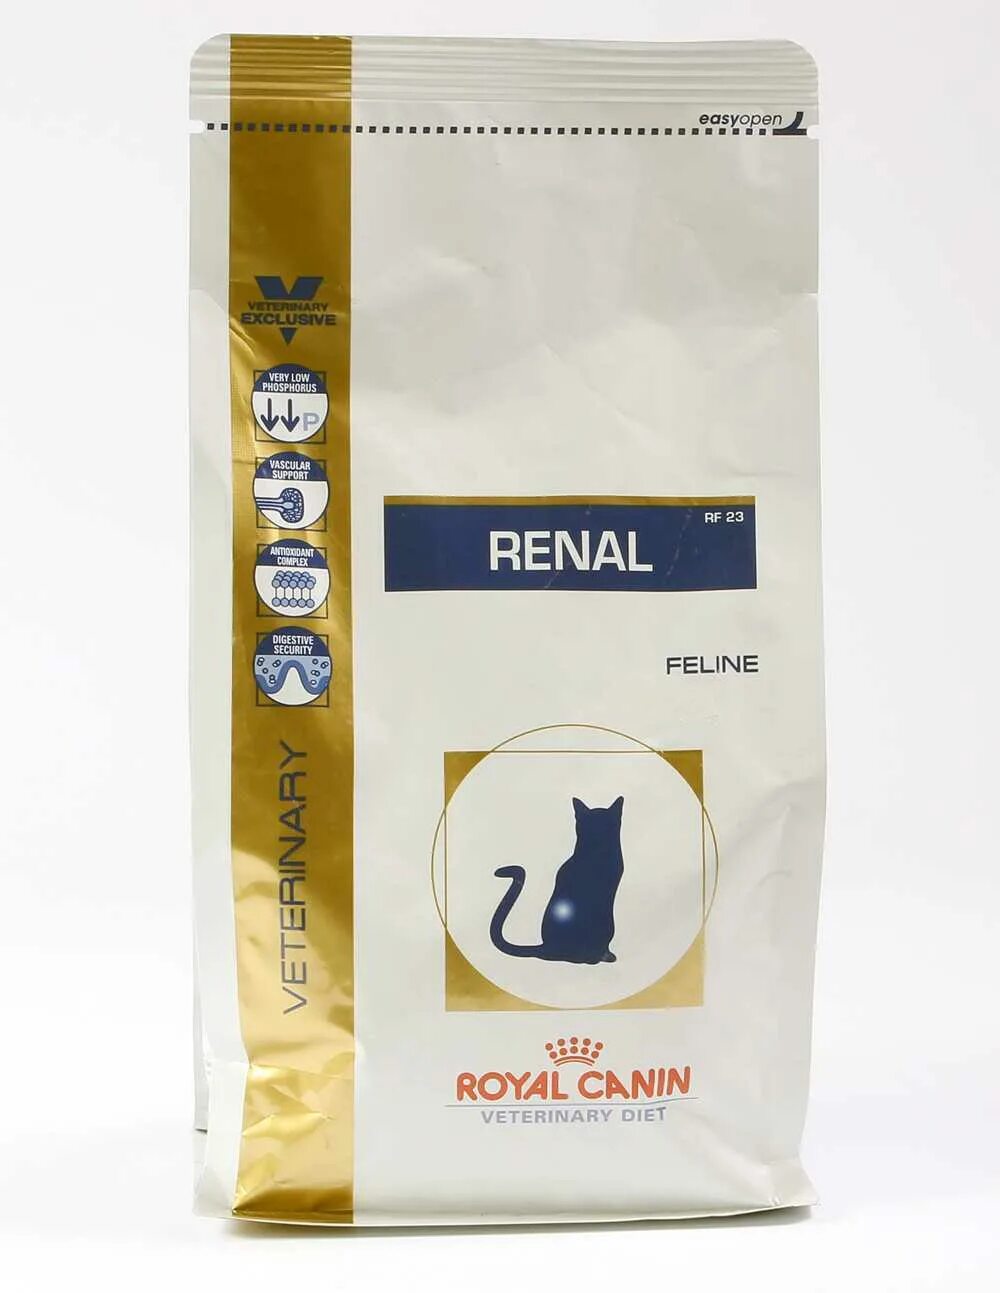 Renal canin renal для кошек купить. Роял Канин Ренал сухой. Royal Canin renal для кошек. Роял Канин Ренал для кошек линейка. Ренал Фелин для кошек Роял Канин.